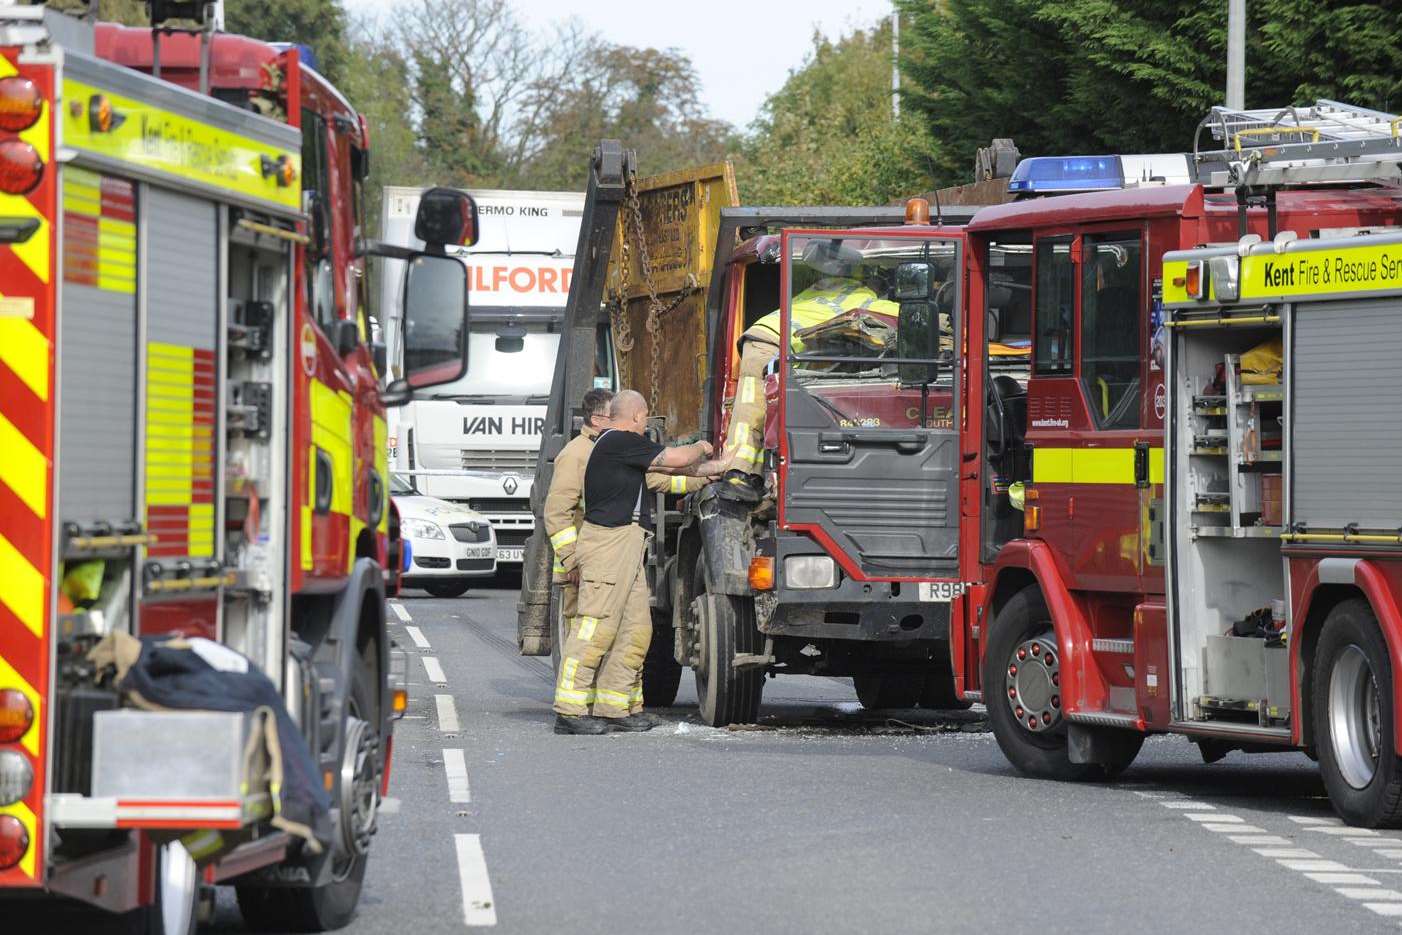 The scene of the crash in Faversham